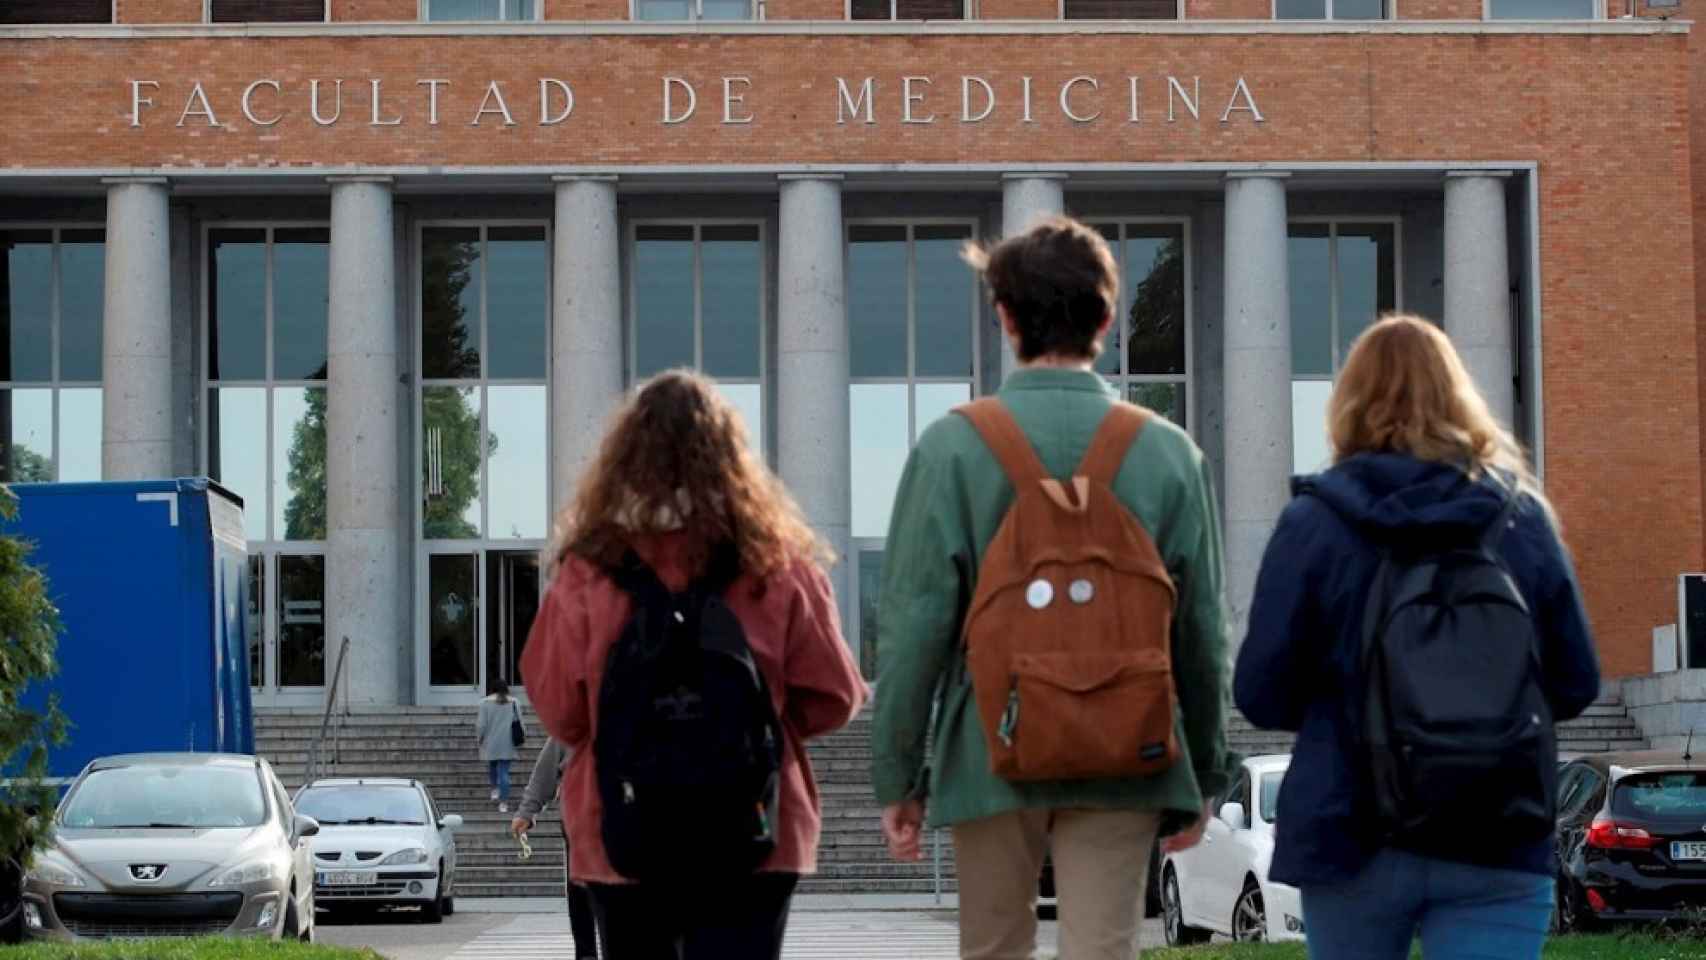 Tres estudiantes se dirigen a la Facultad de Medicina.